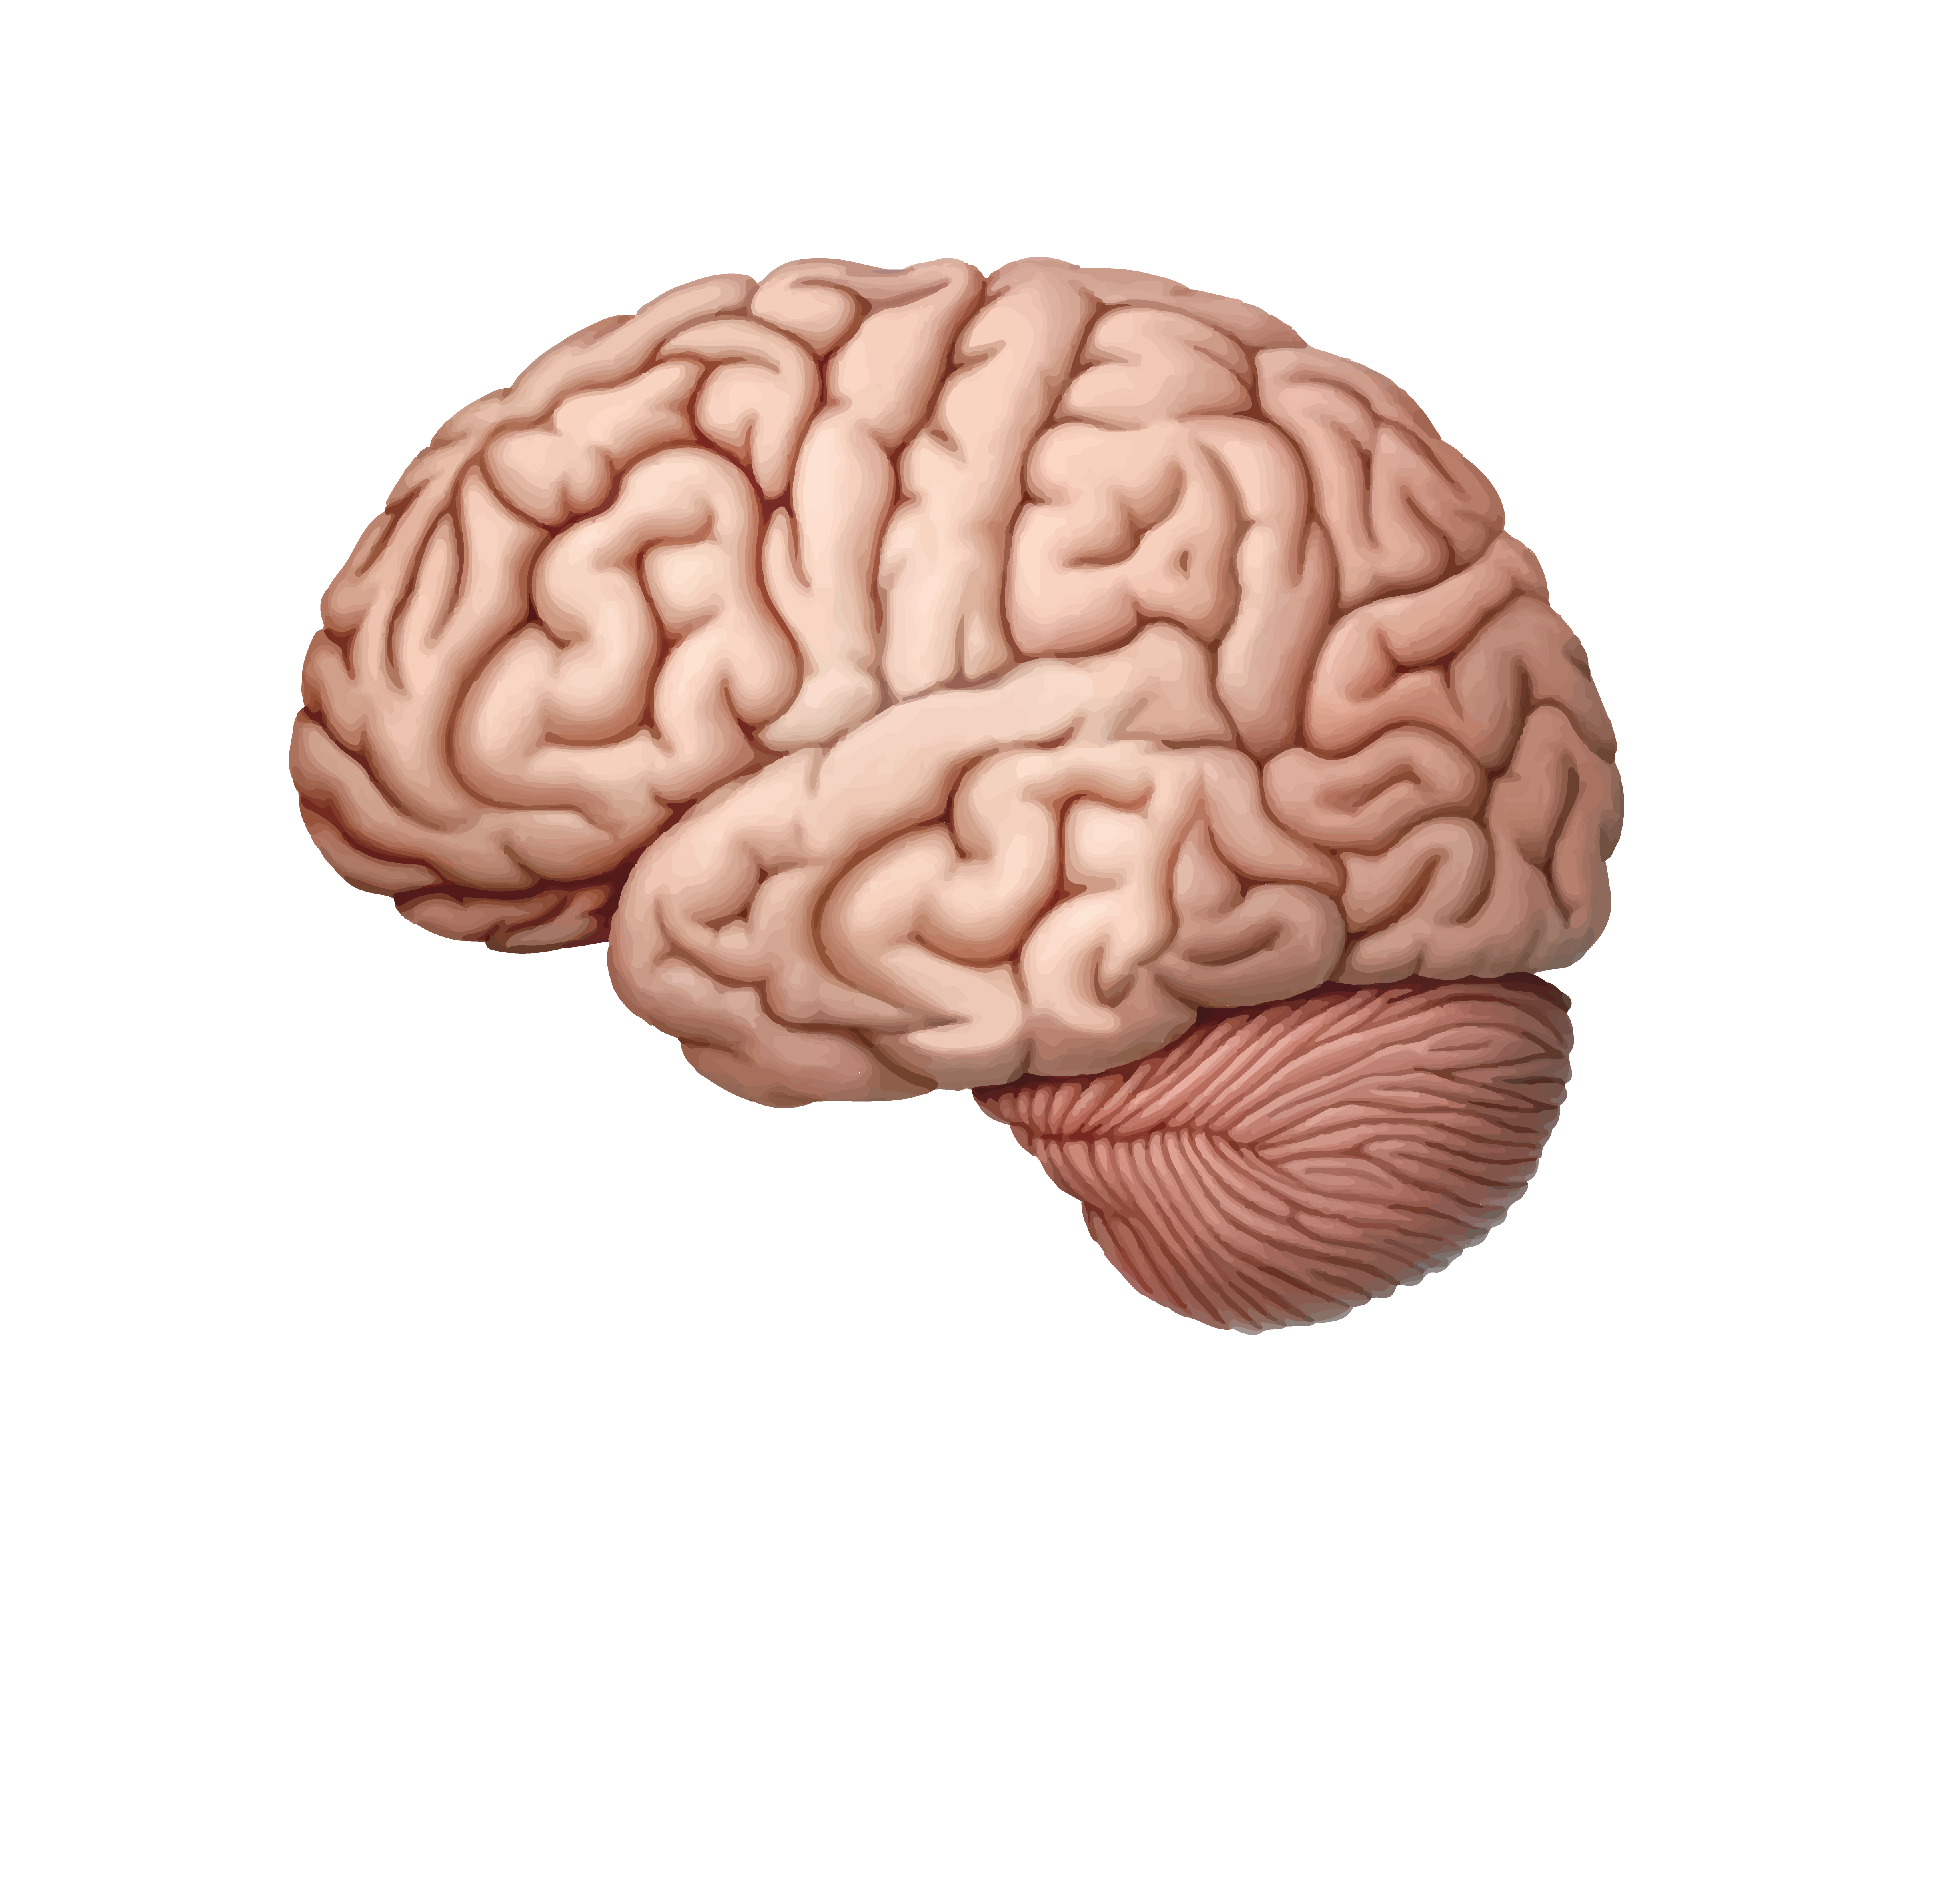 https://brainhealth.rutgers.edu/wp-content/uploads/2022/10/Rutgers-logo2.png